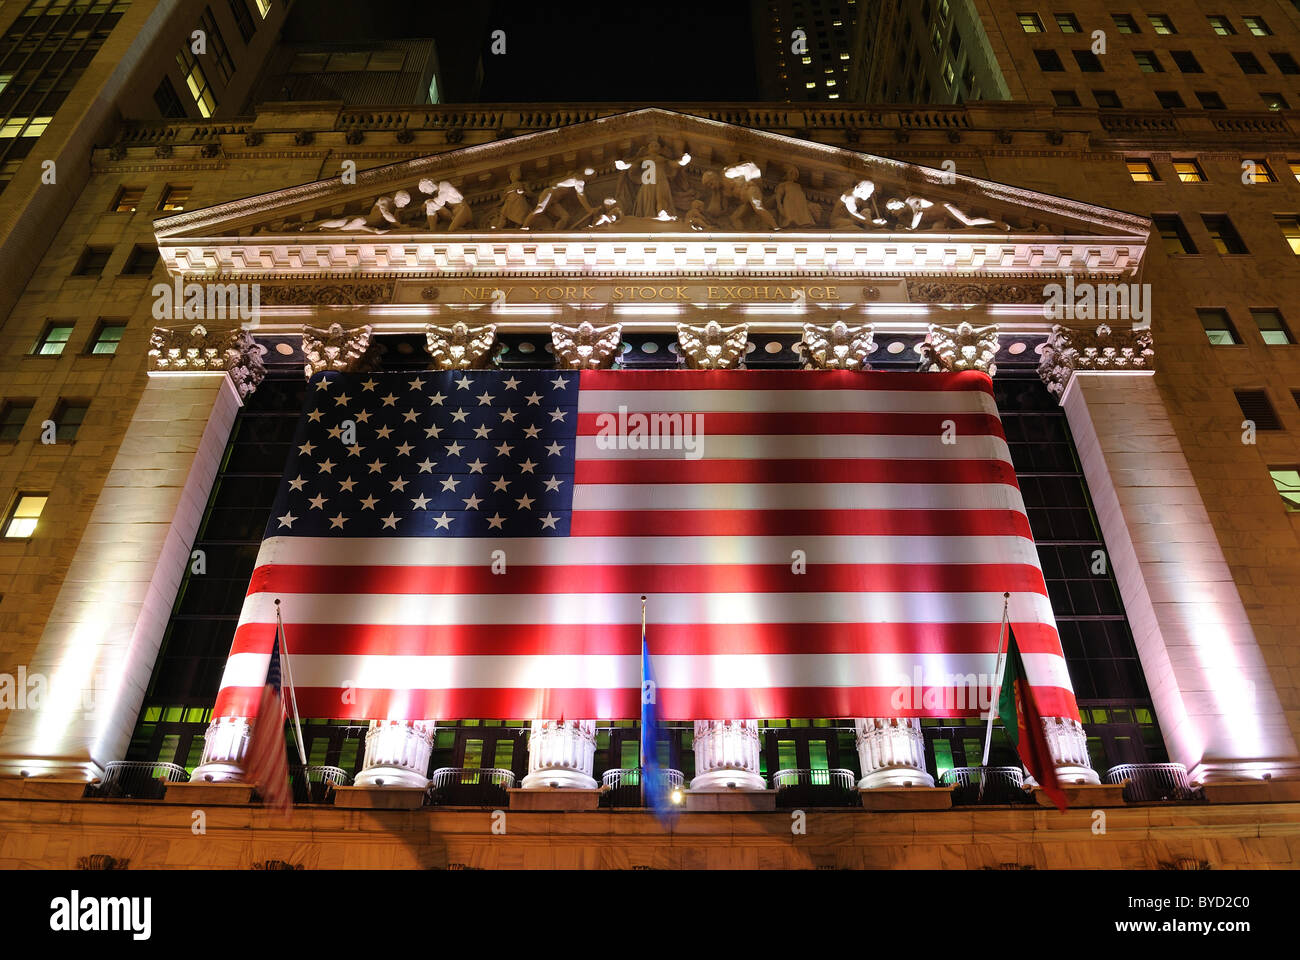 The historic New York Stock Exchange in New YOrk City. May 26, 2010. Stock Photo